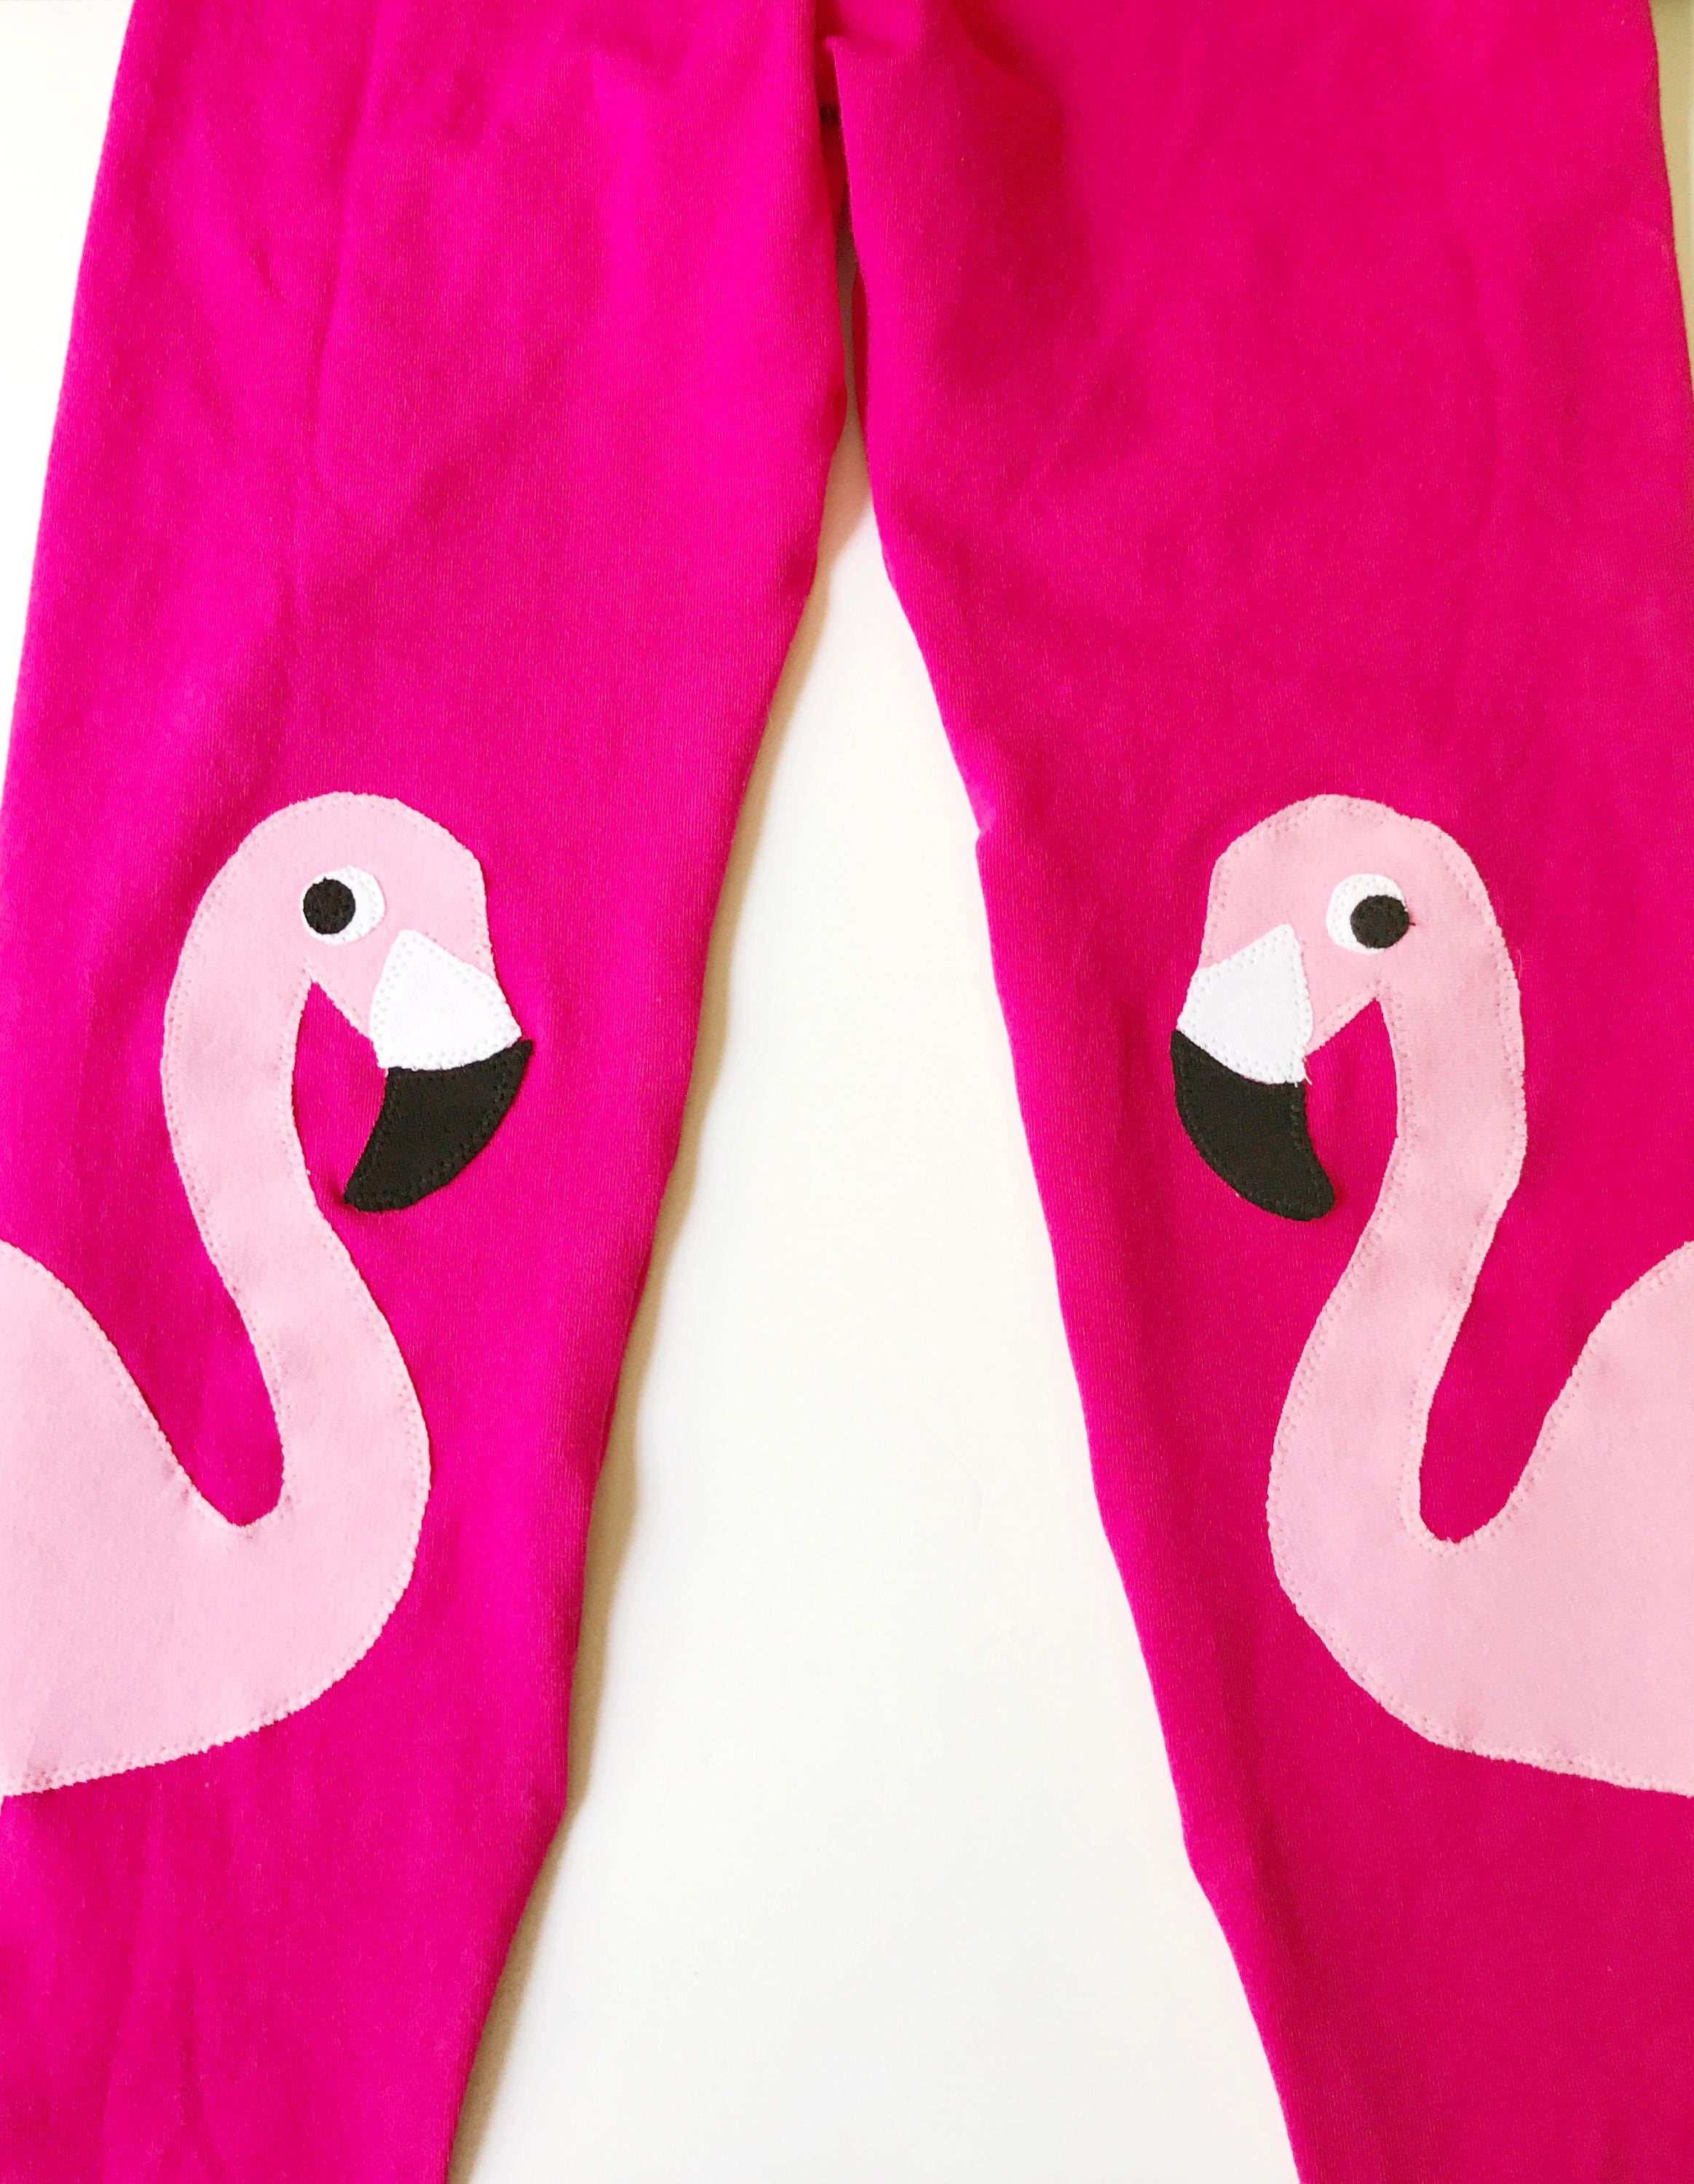 Buttery Soft Gorgeous Pink Flamingos Plus Size Leggings - 3X-5X